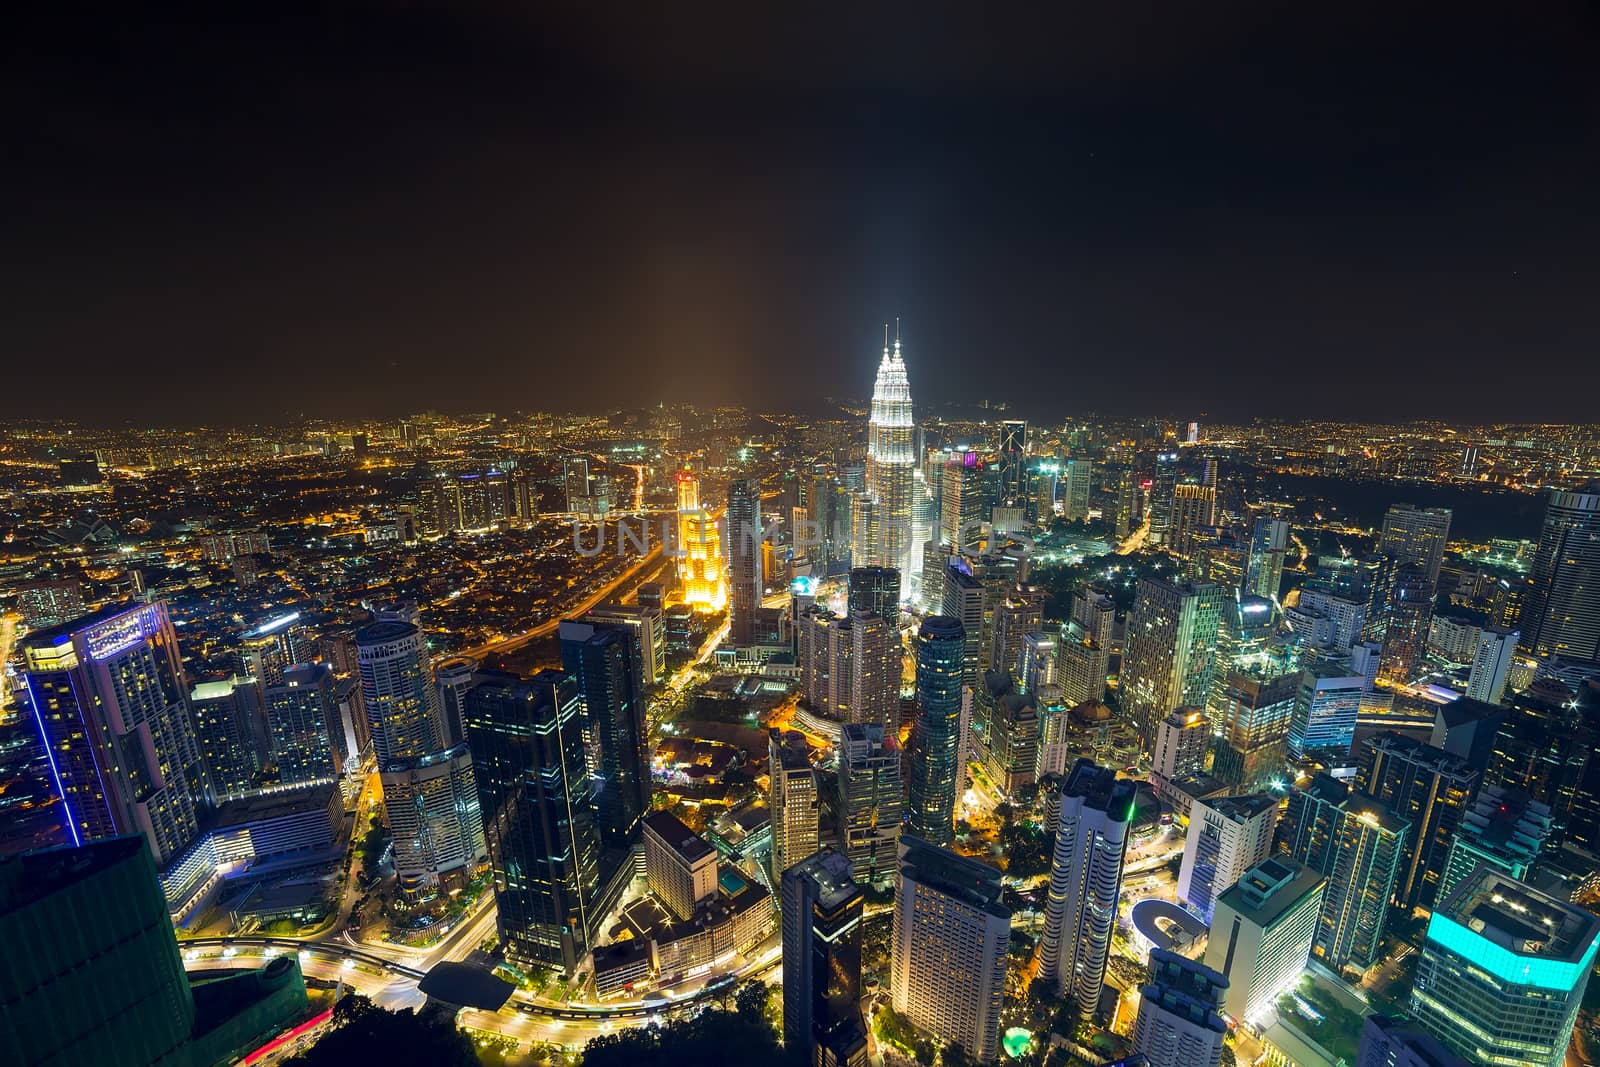 Kuala Lumpur Aerial Nightscape by jpldesigns